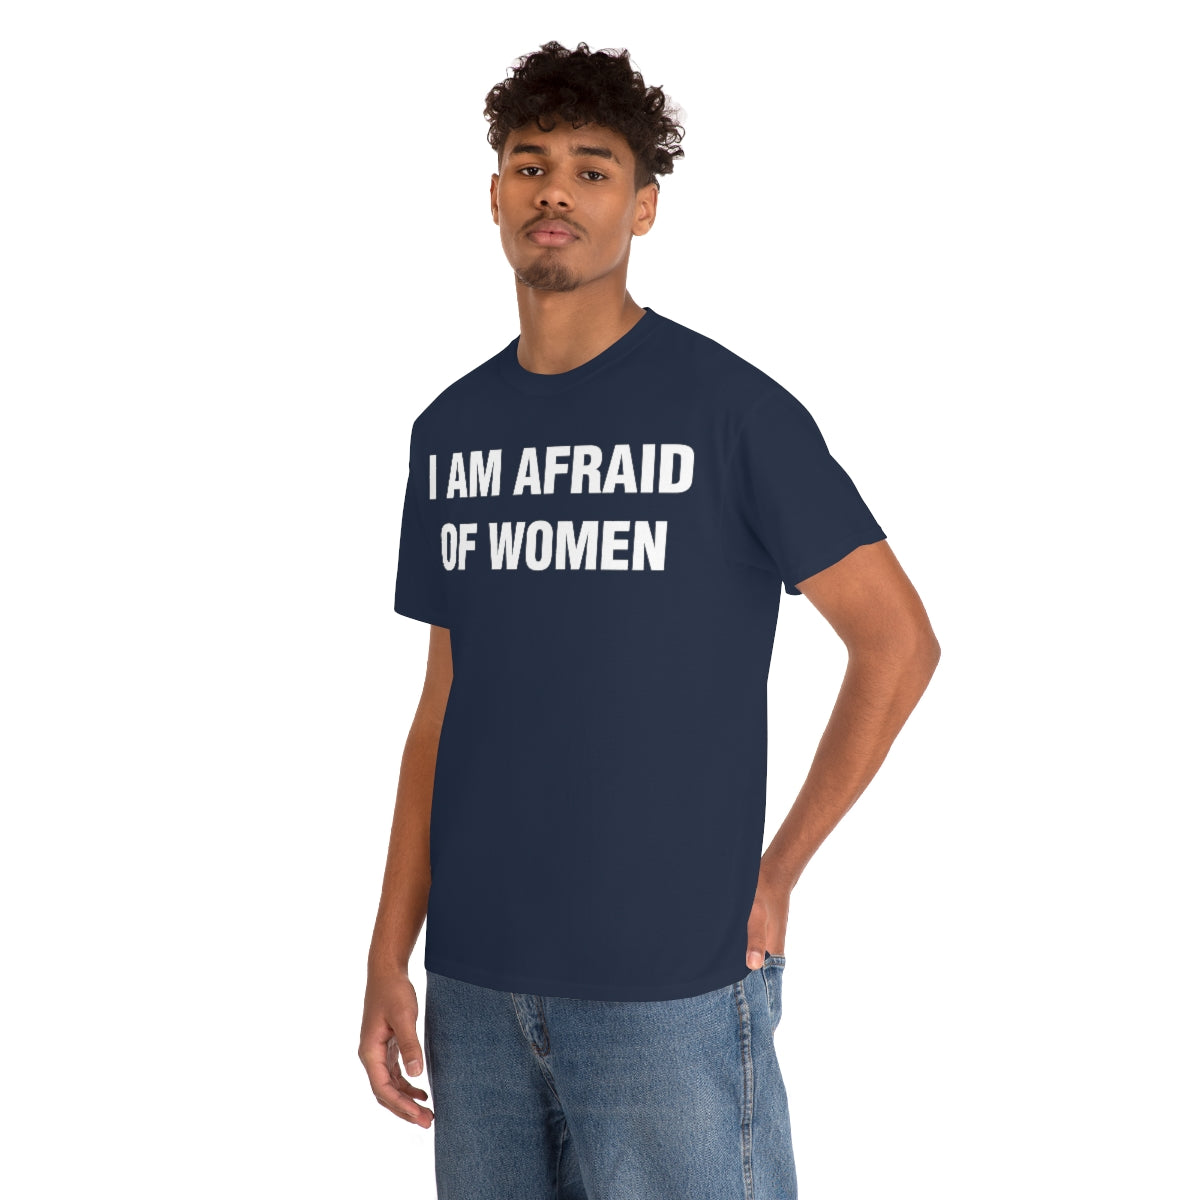 I AM AFRAID OF WOMEN TEE